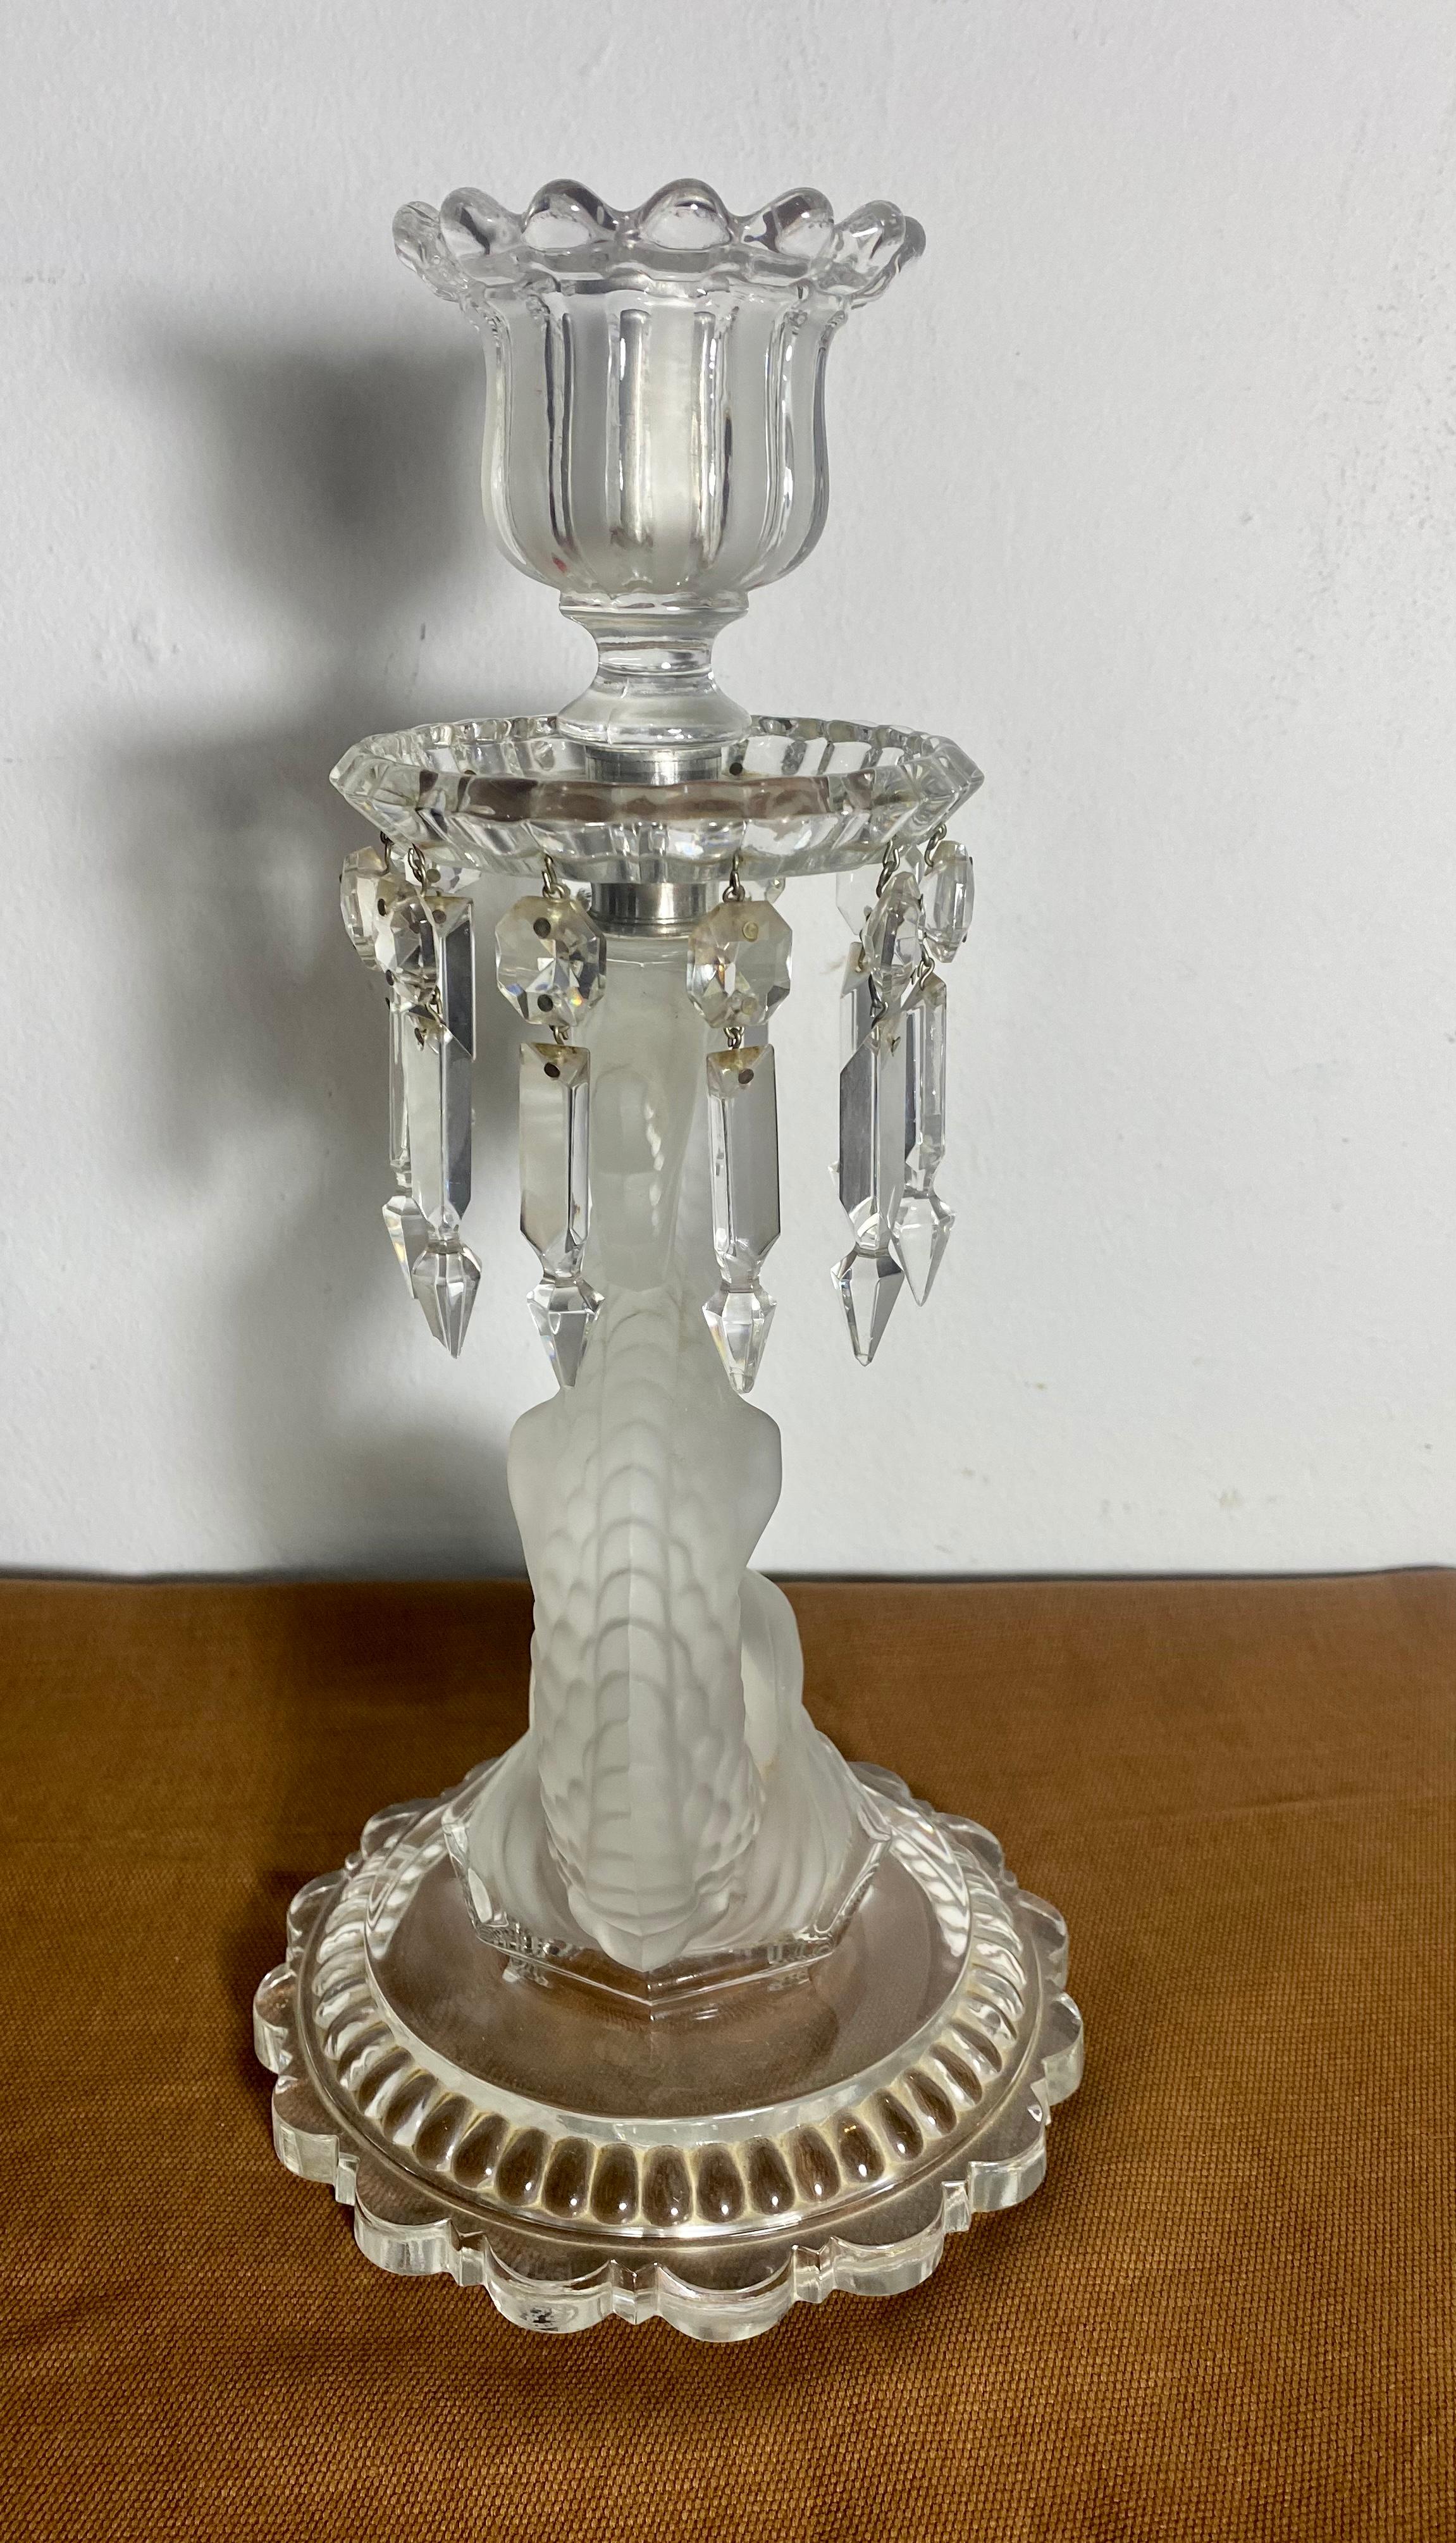 Belle Époque Baccarat Crystal Candelabra The Model Dauphin Light Made in France 